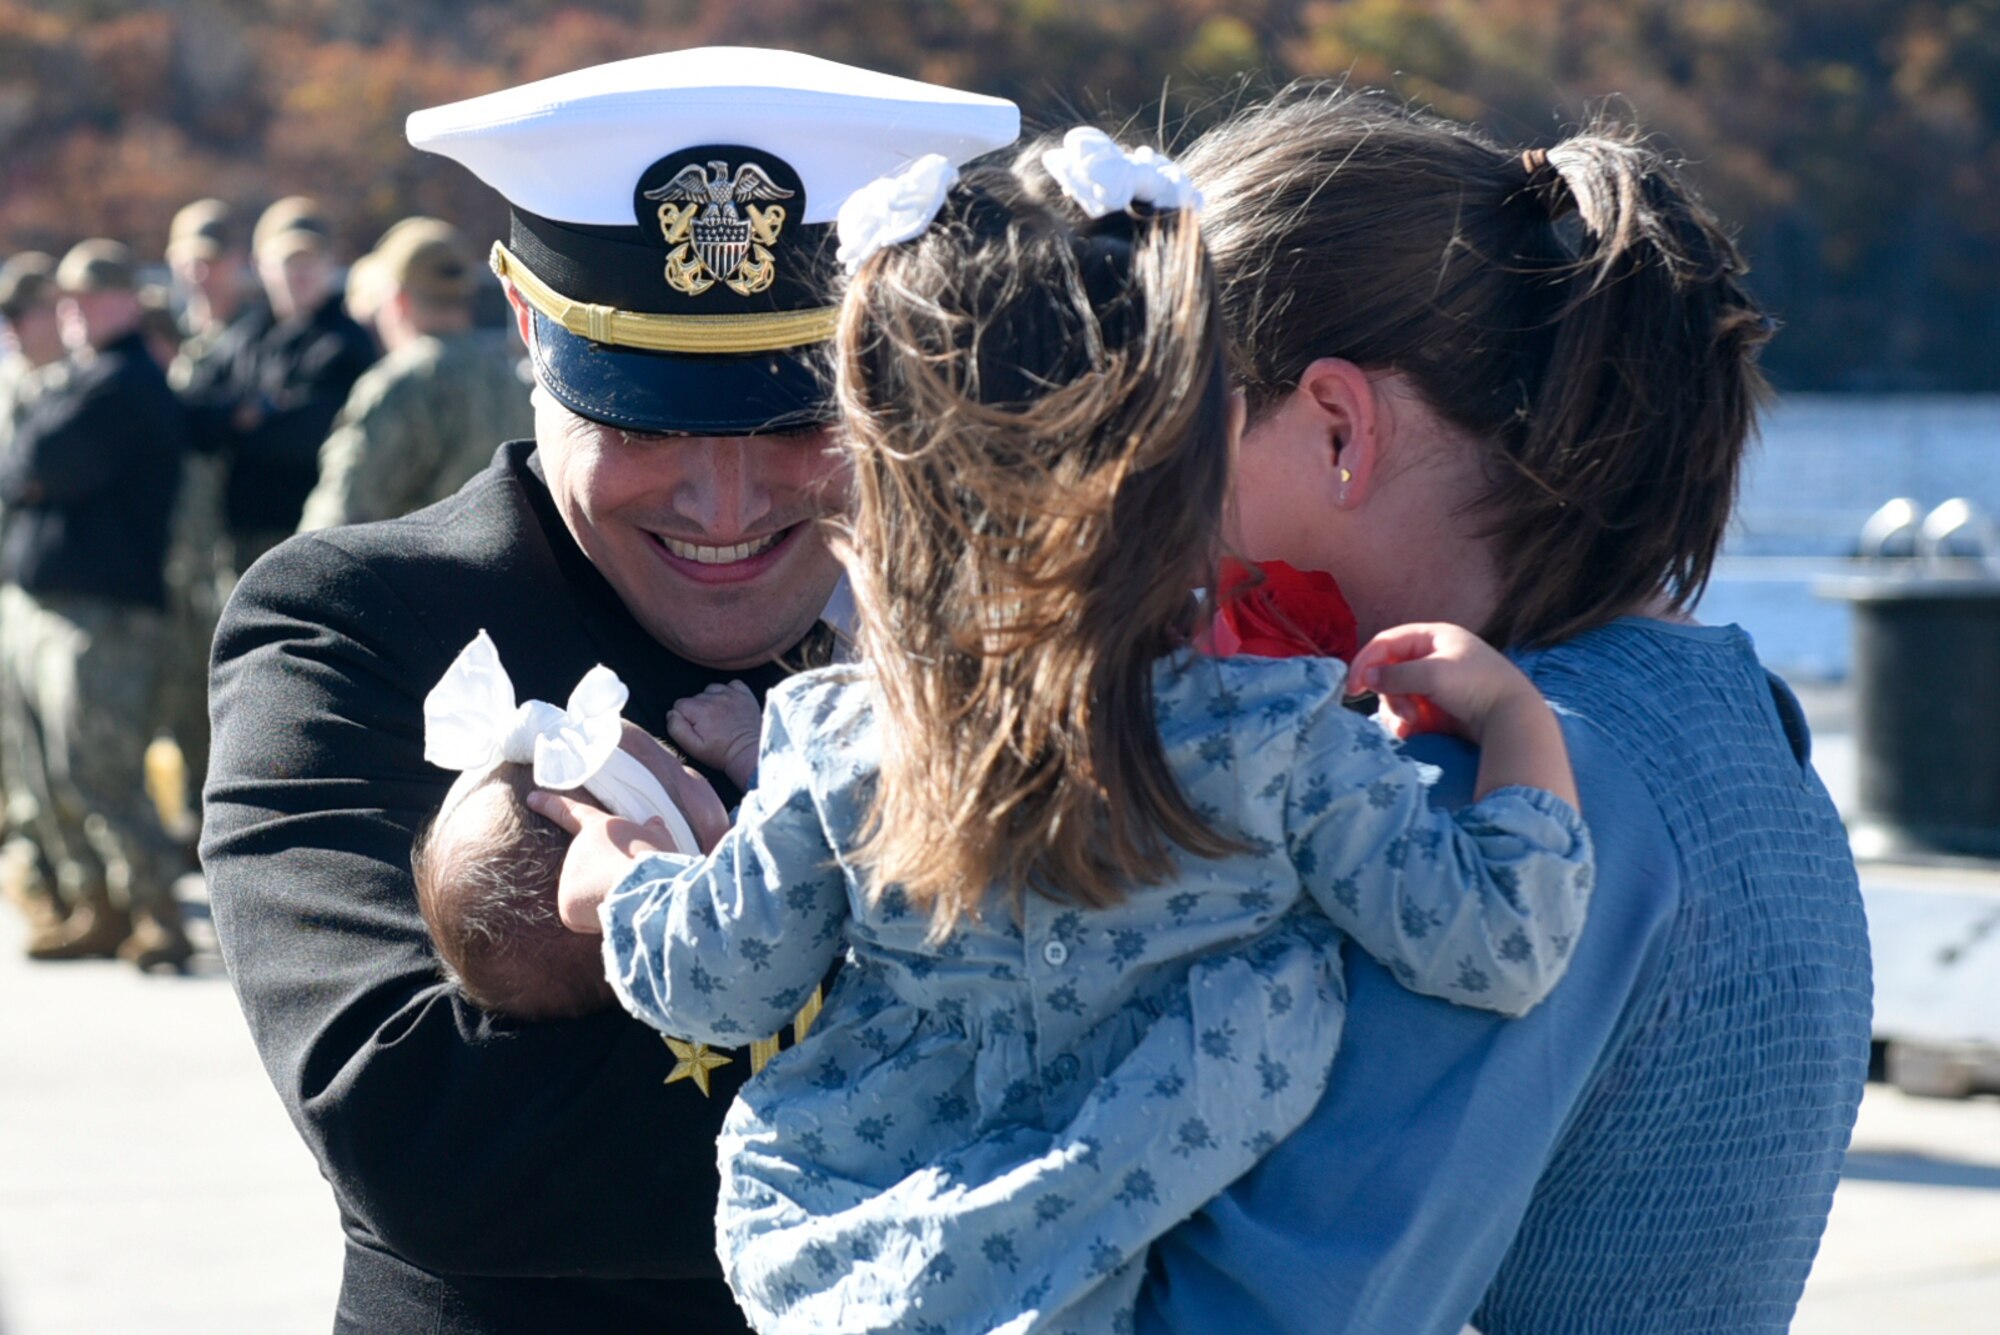 Service member hugs family